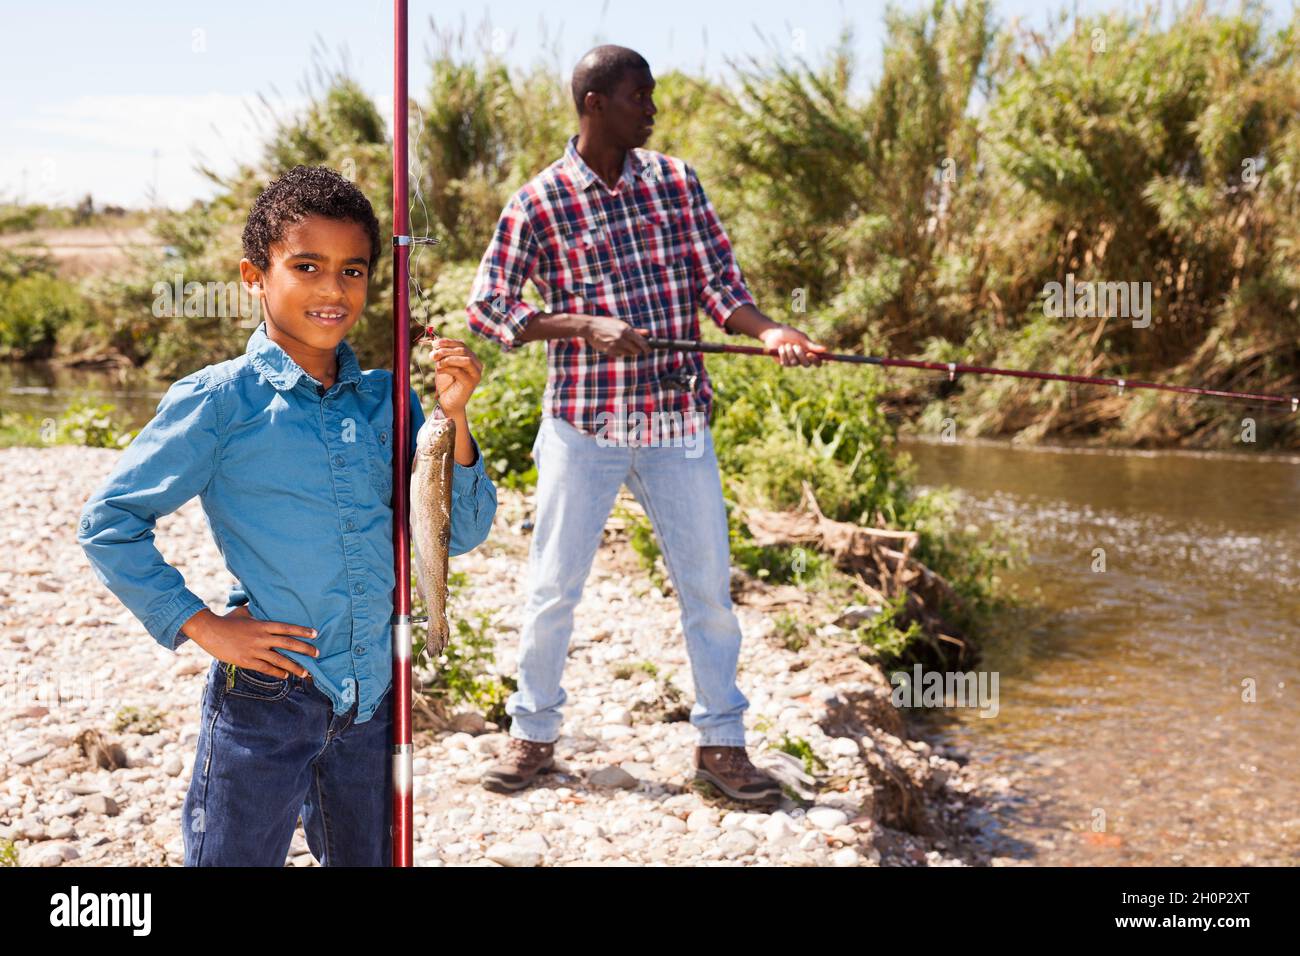 Man and boy holding fish on rod Stock Photo